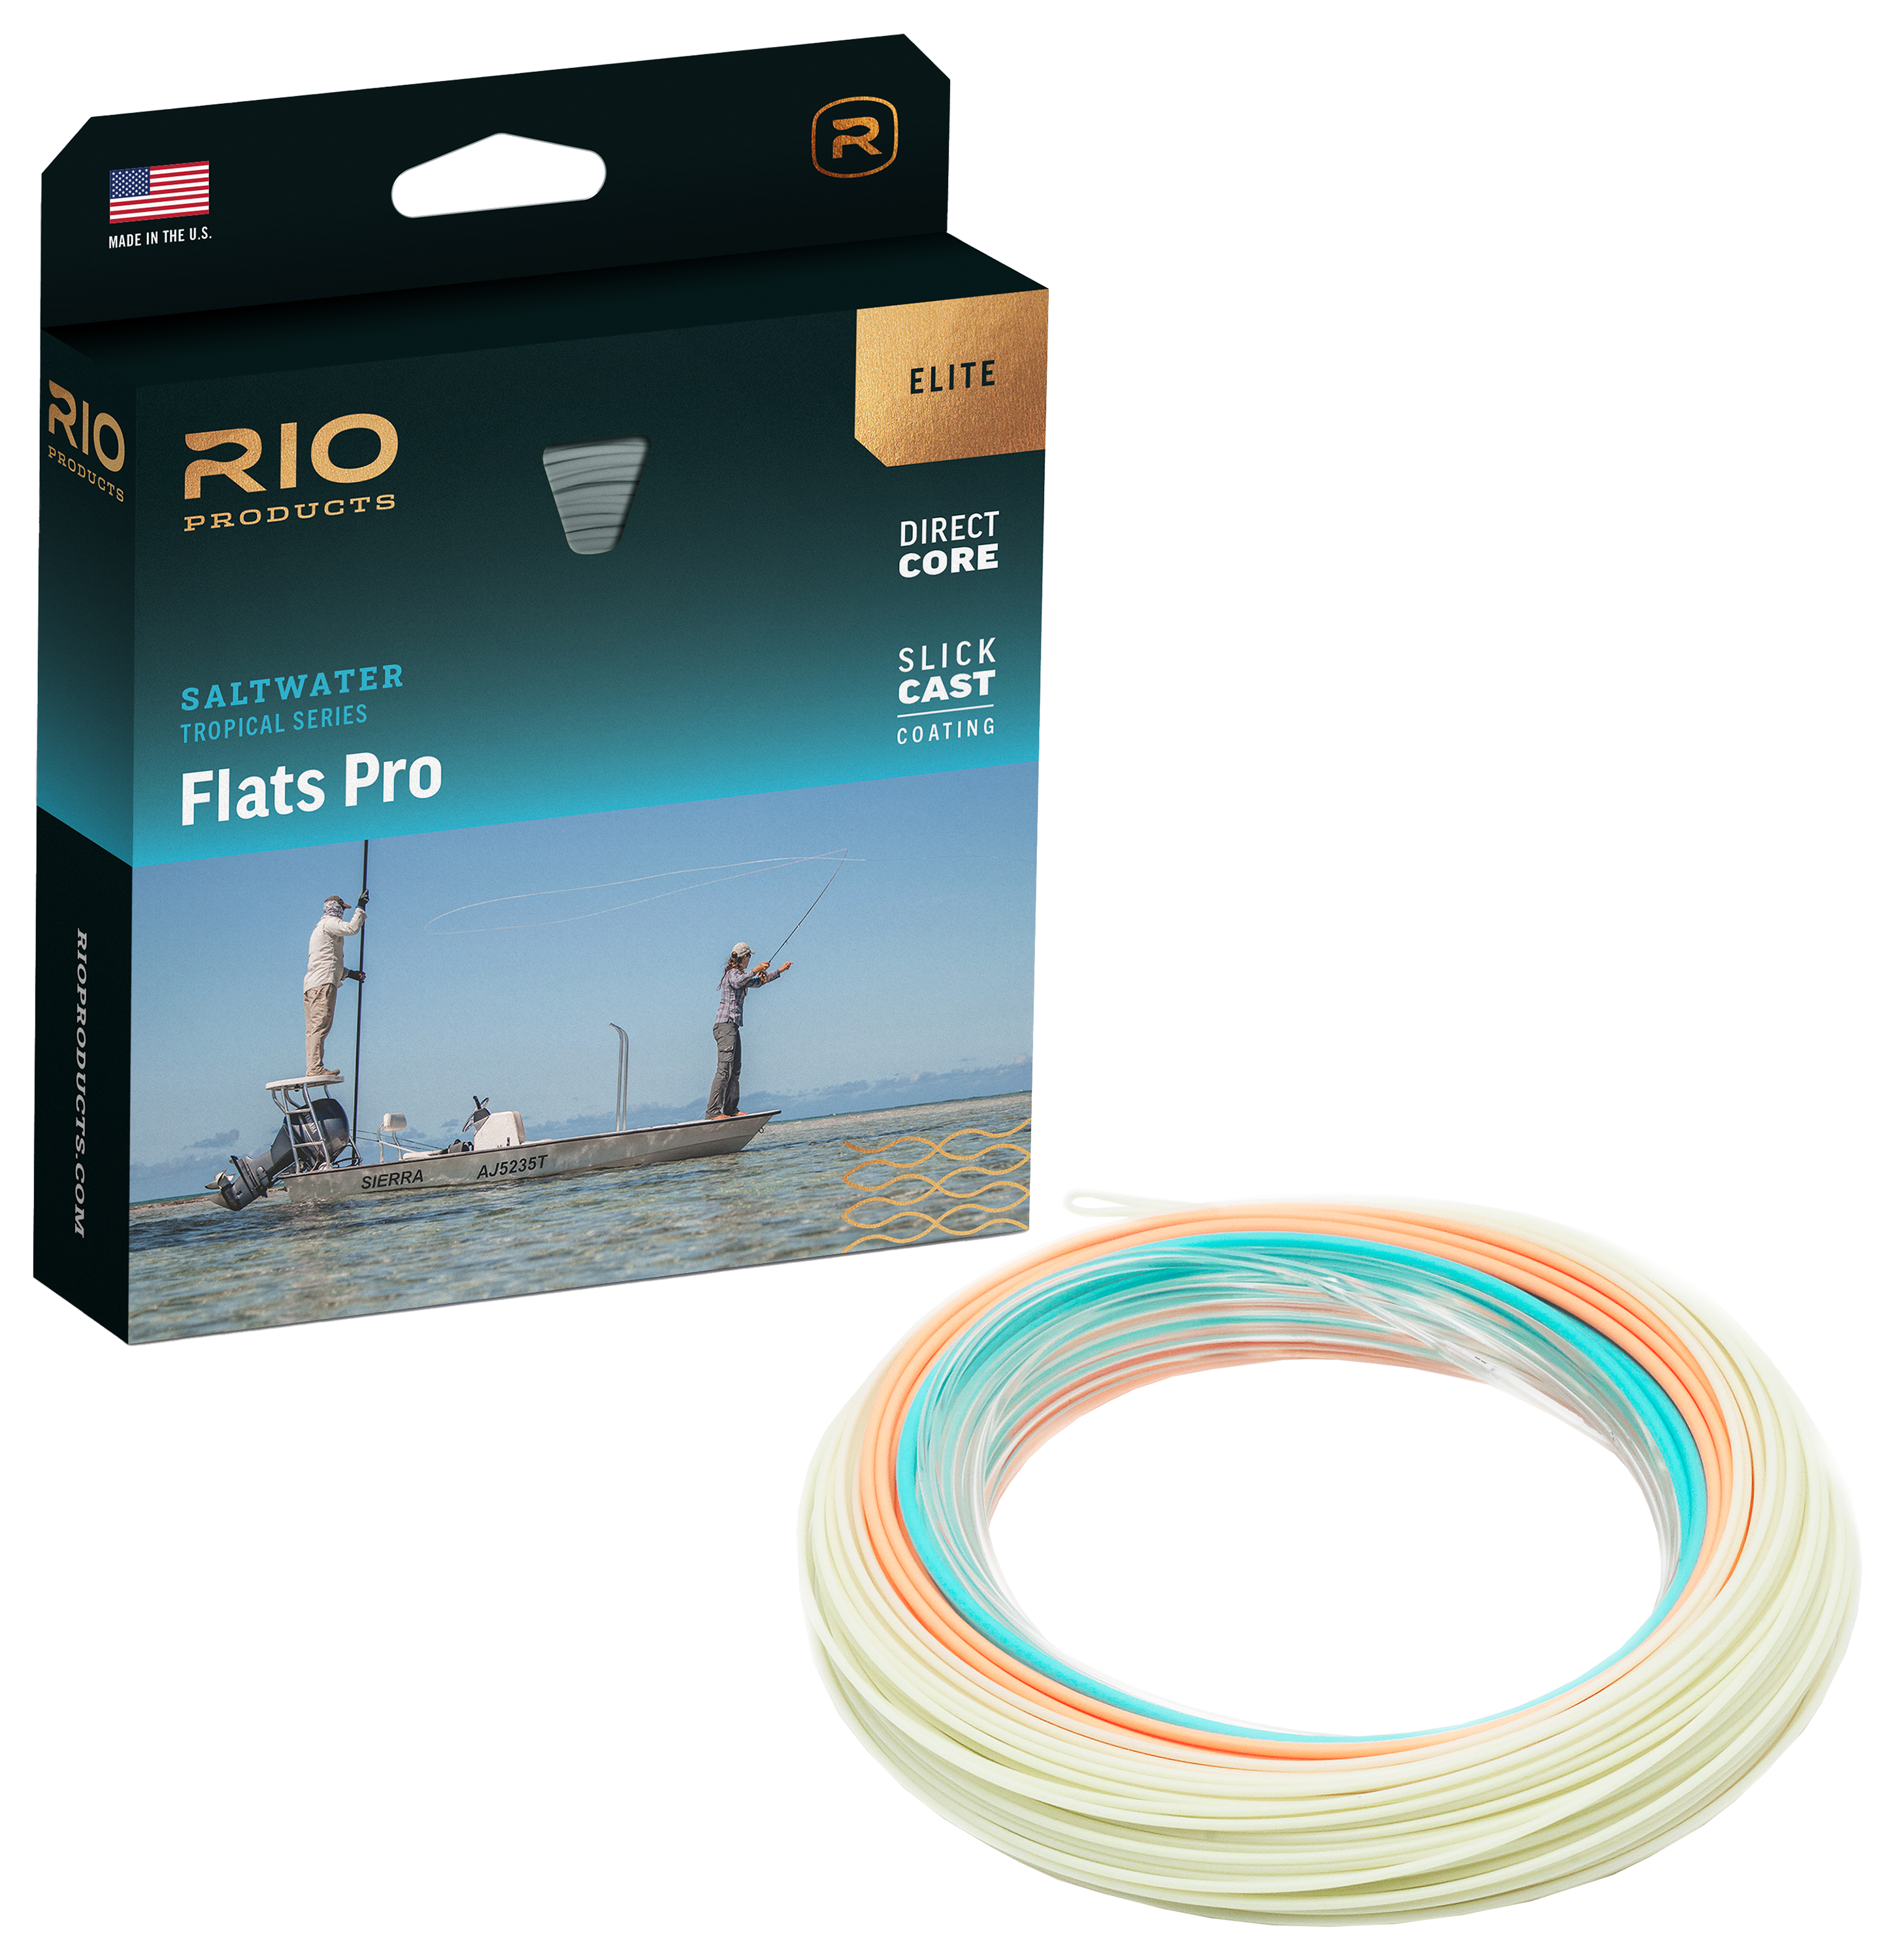 RIO Elite Flats Pro 15' Clear-Tip Fly Line - Clear/Aqua/Orange/Sand - 9